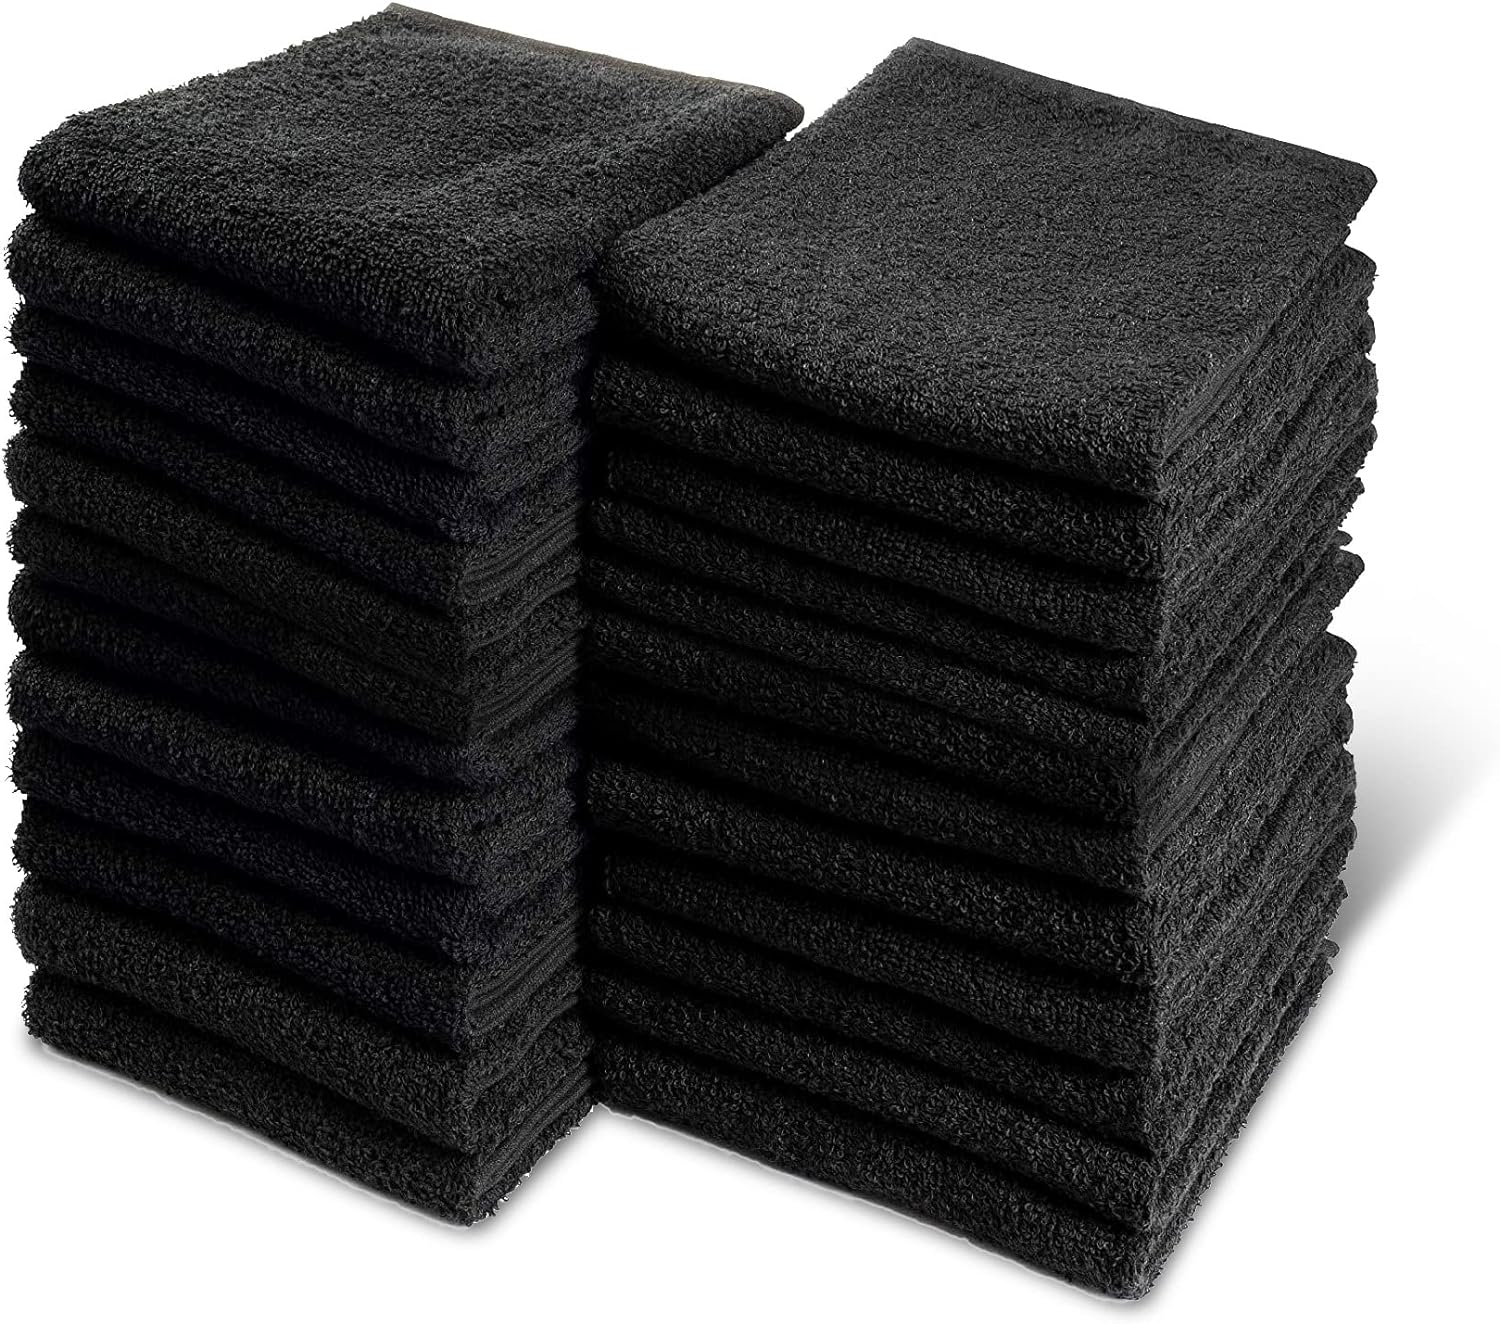 Groko Textiles Black Bleach Proof Towels